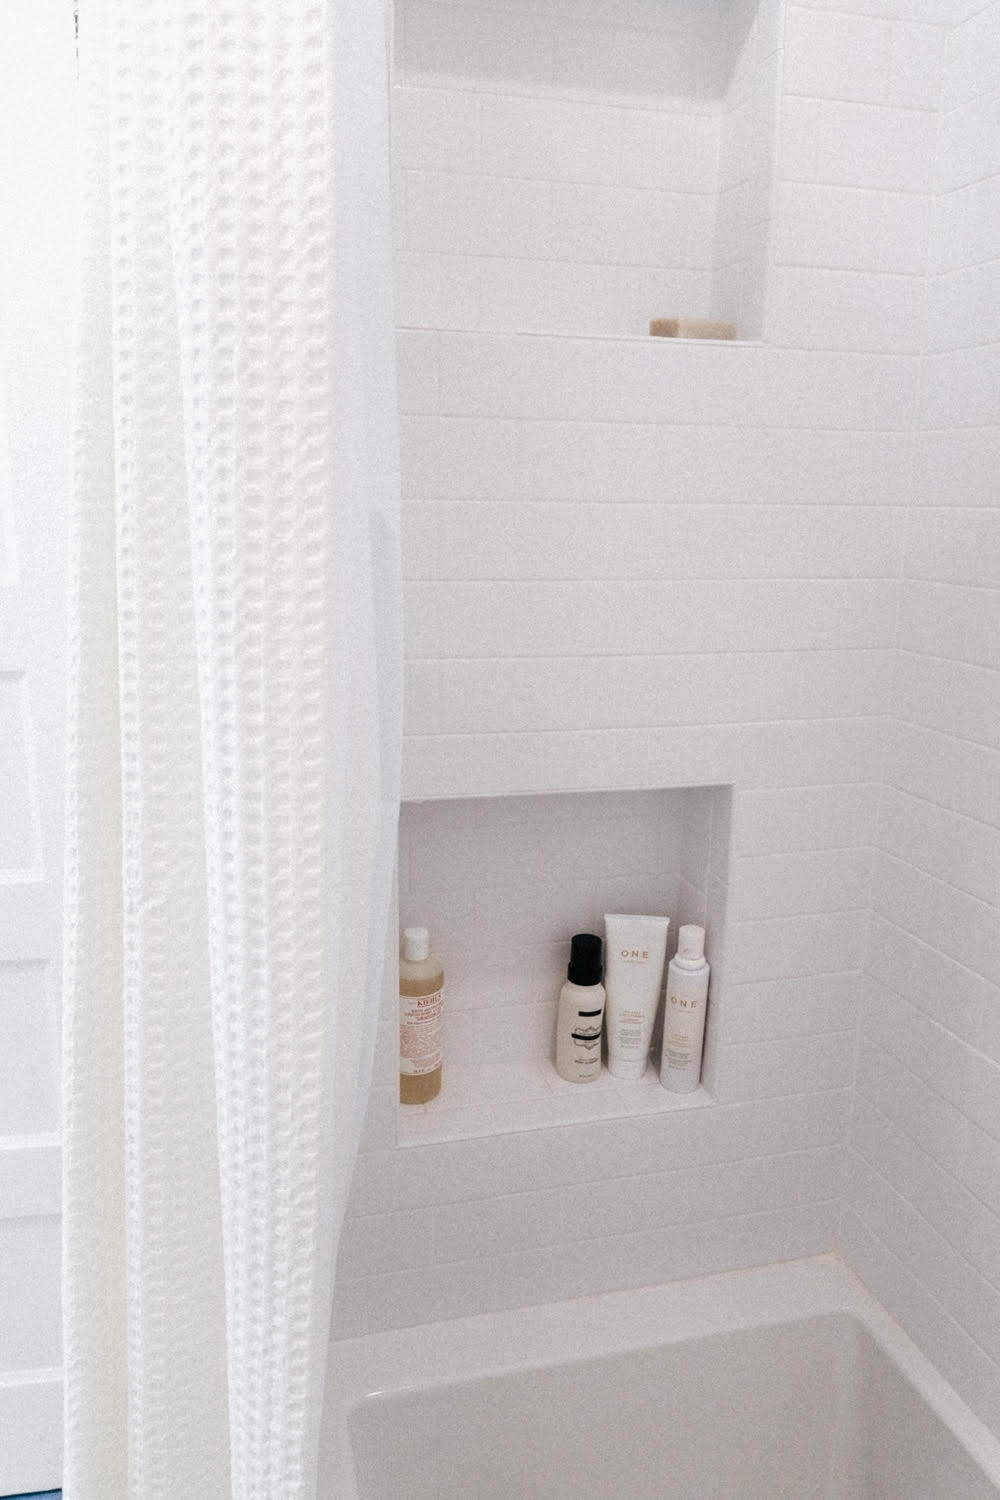 Simply by Simone - Simone Piliero - My Black and White Bathroom Renovation - Finished Photos - Bathtub and Shower Shelves #bathroom #home #renovation #bathroomrenovation #diyhome #bathroomtiles #bathroomdecor #bathroomideas #bathroomrenovationideas